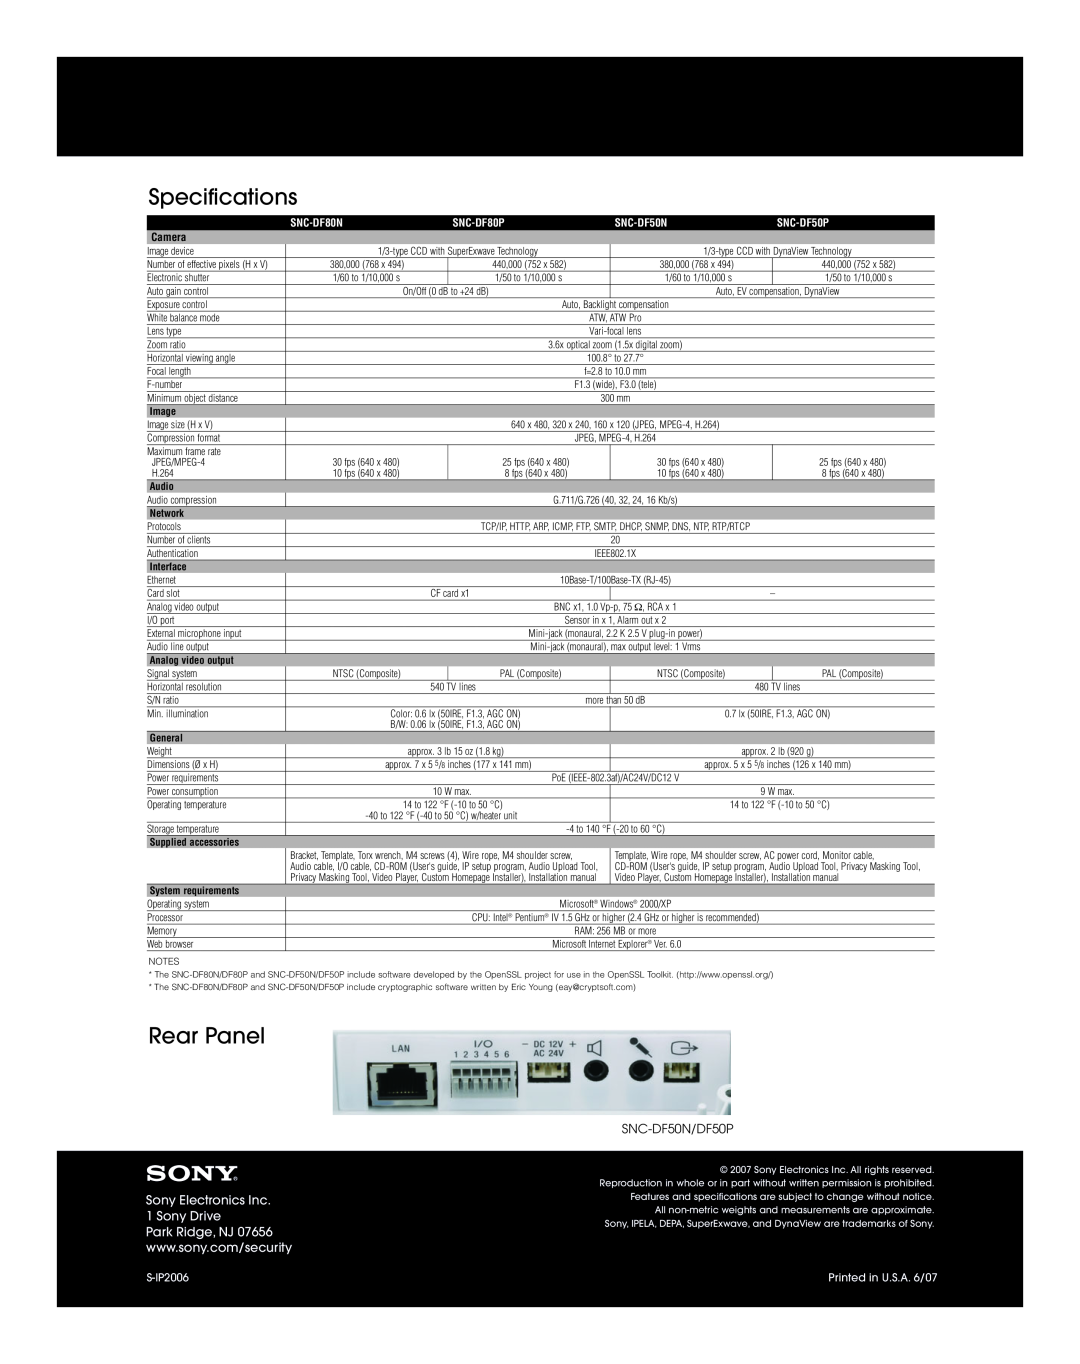 Sony Specifications, Rear Panel, Sony Electronics Inc 1 Sony Drive, SNC-DF50N/DF50P, SNC-DF80N, SNC-DF80P, SNC-DF50P 